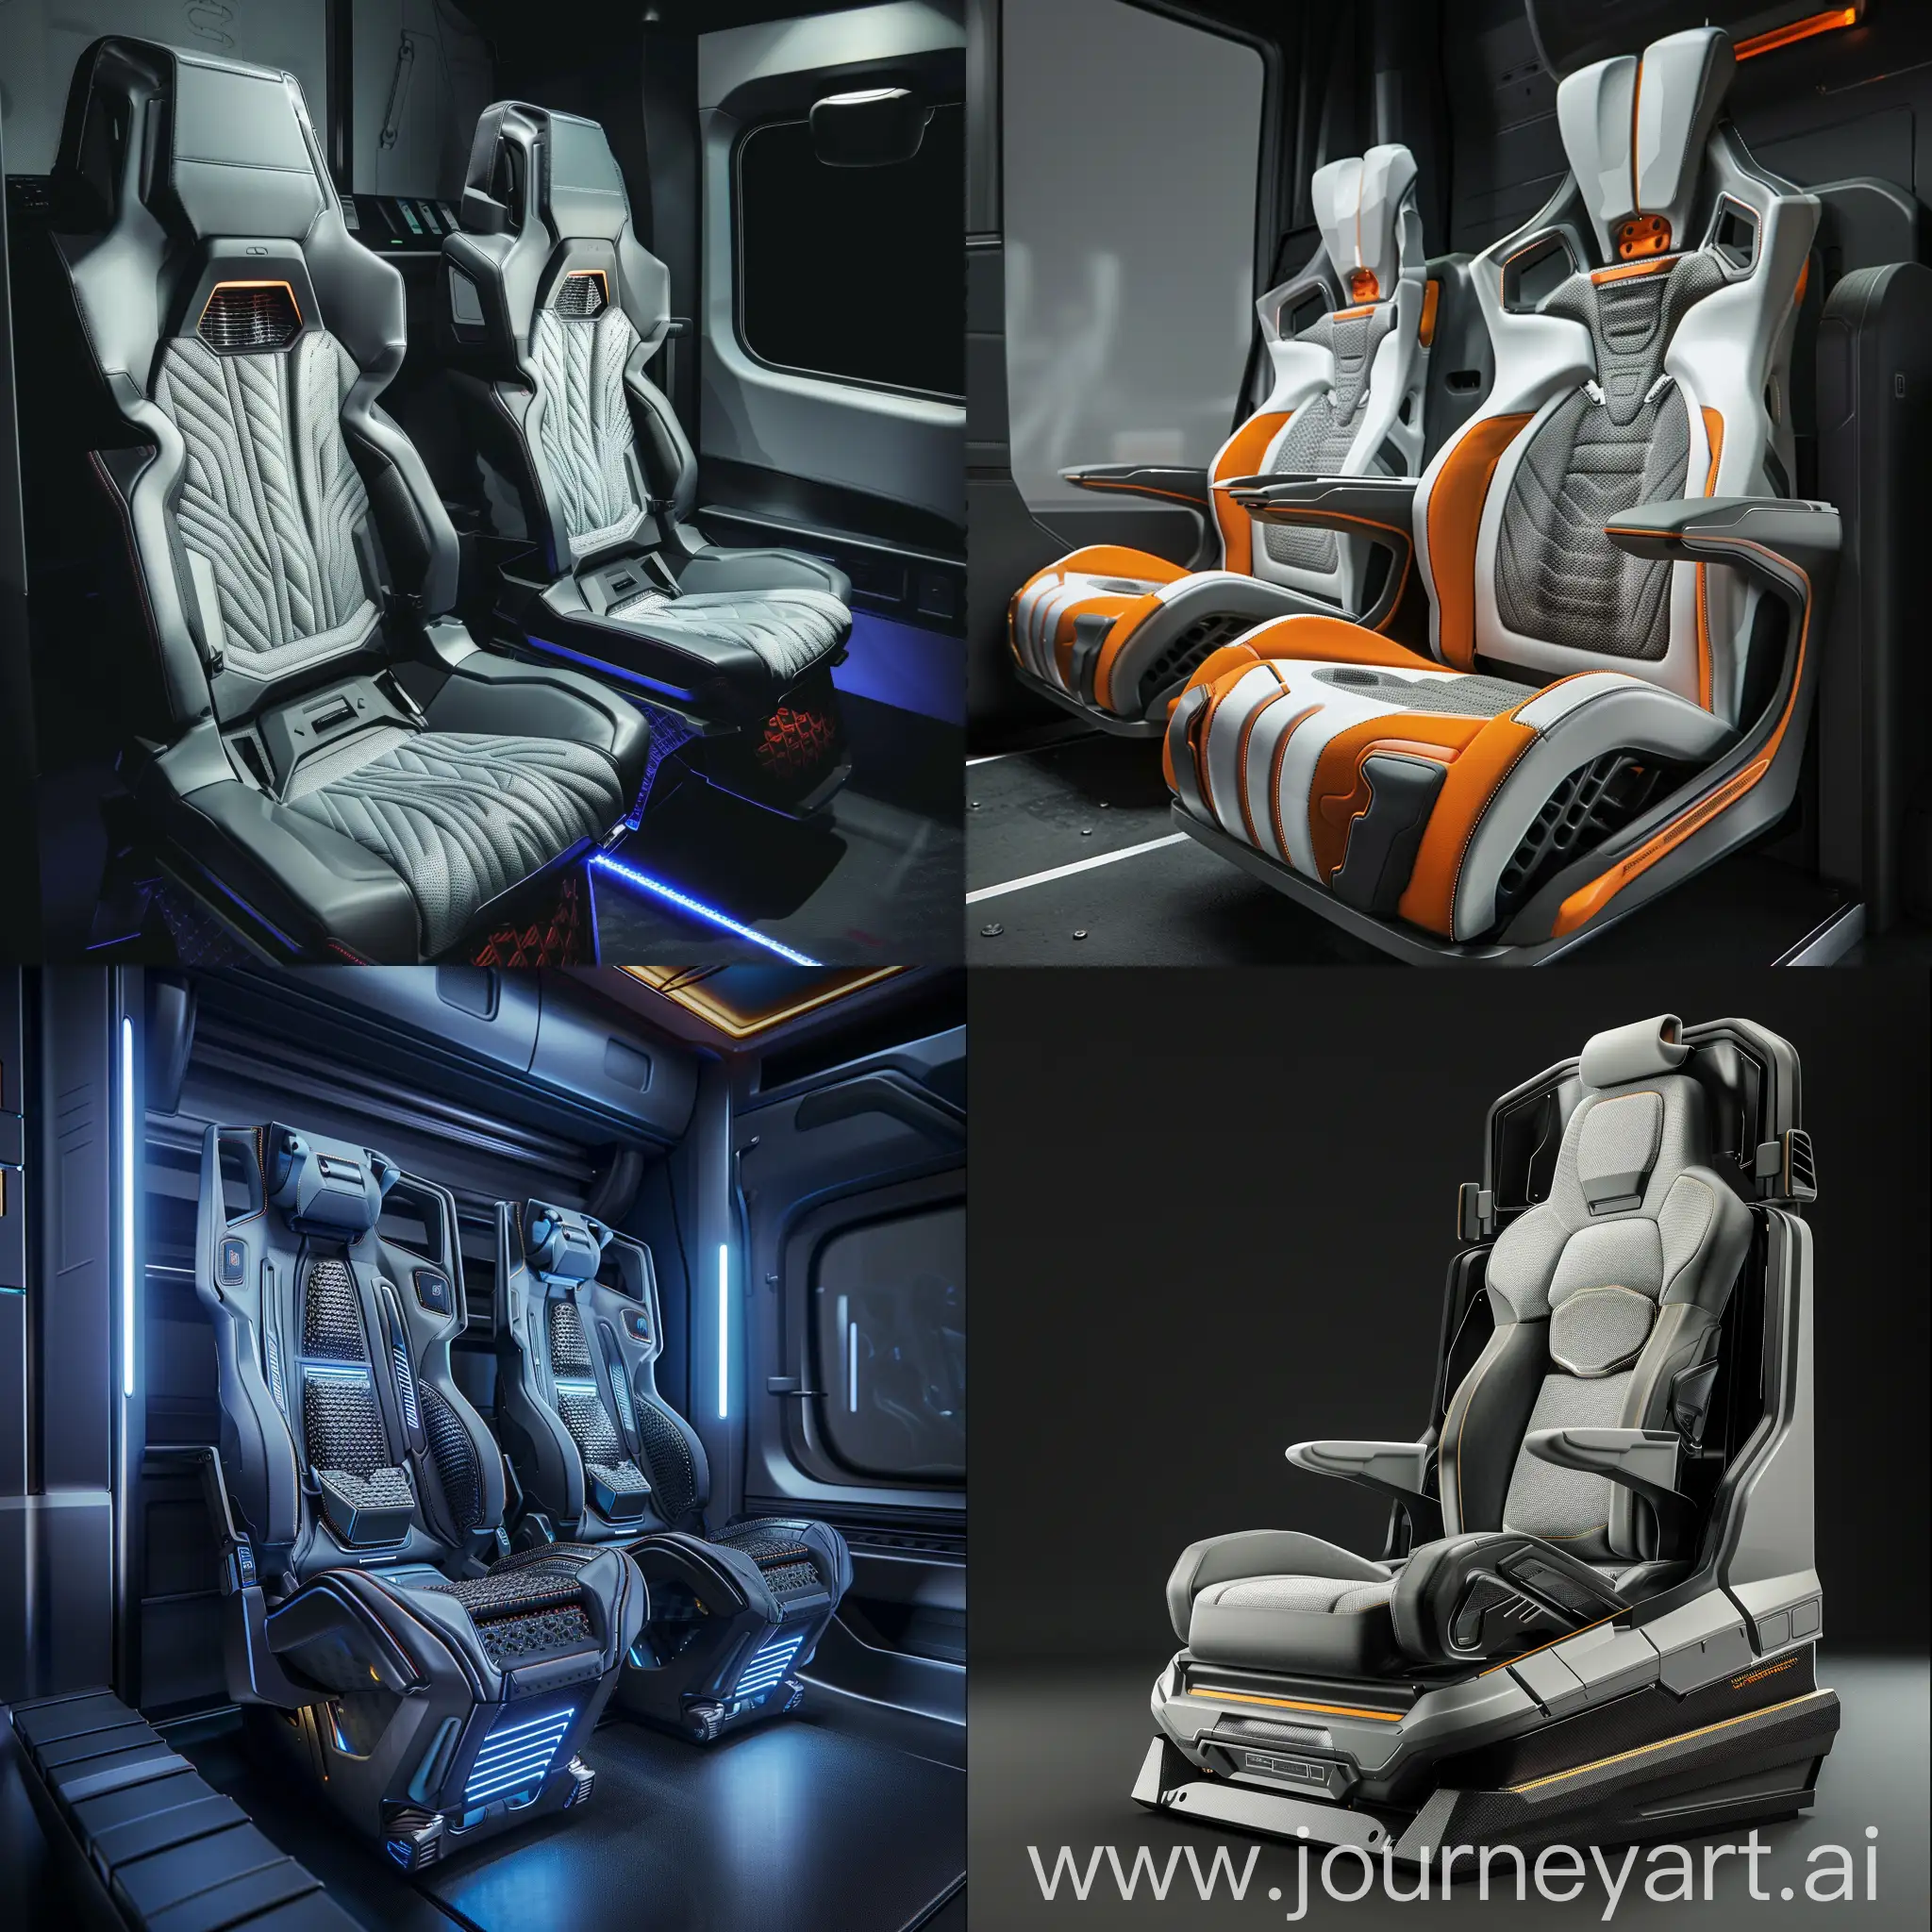 Futuristic-Heavy-Truck-Seats-Advanced-Technology-Design